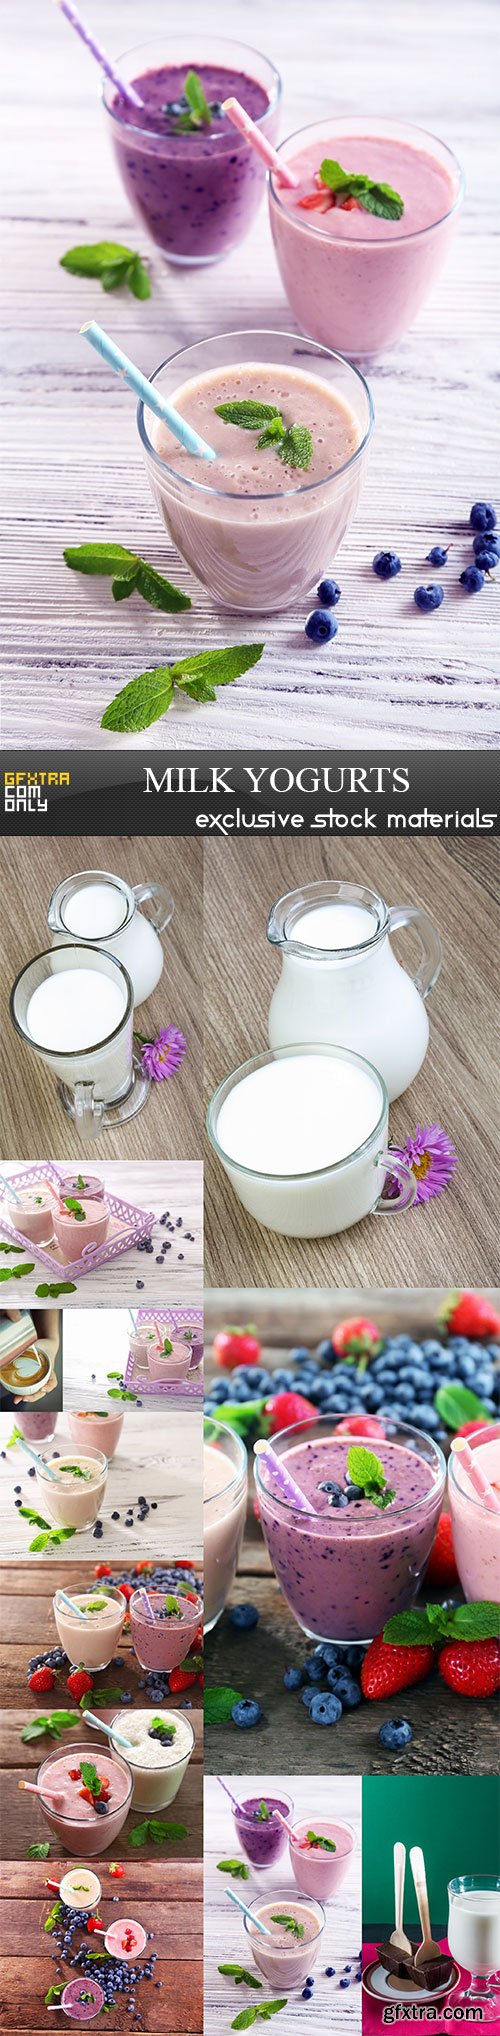 Milk yogurts, 12 x UHQ JPEG